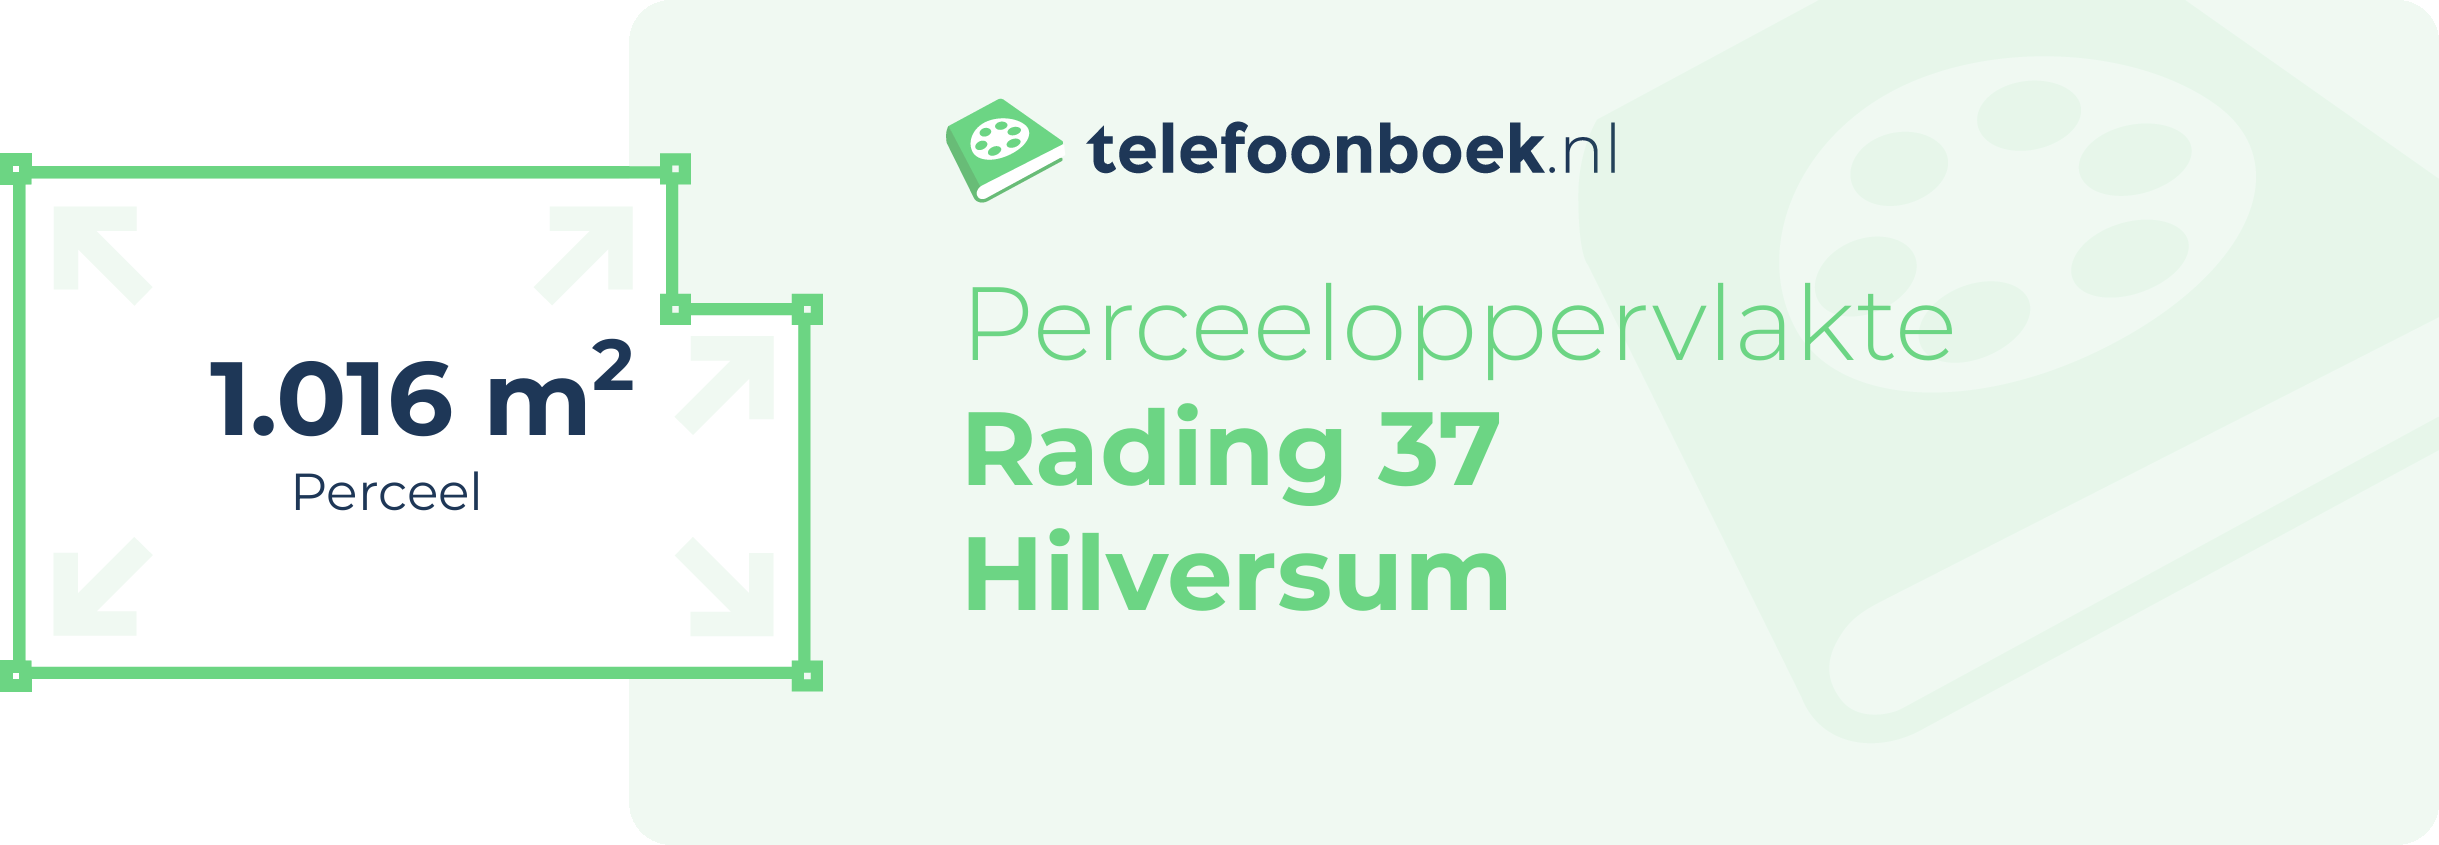 Perceeloppervlakte Rading 37 Hilversum